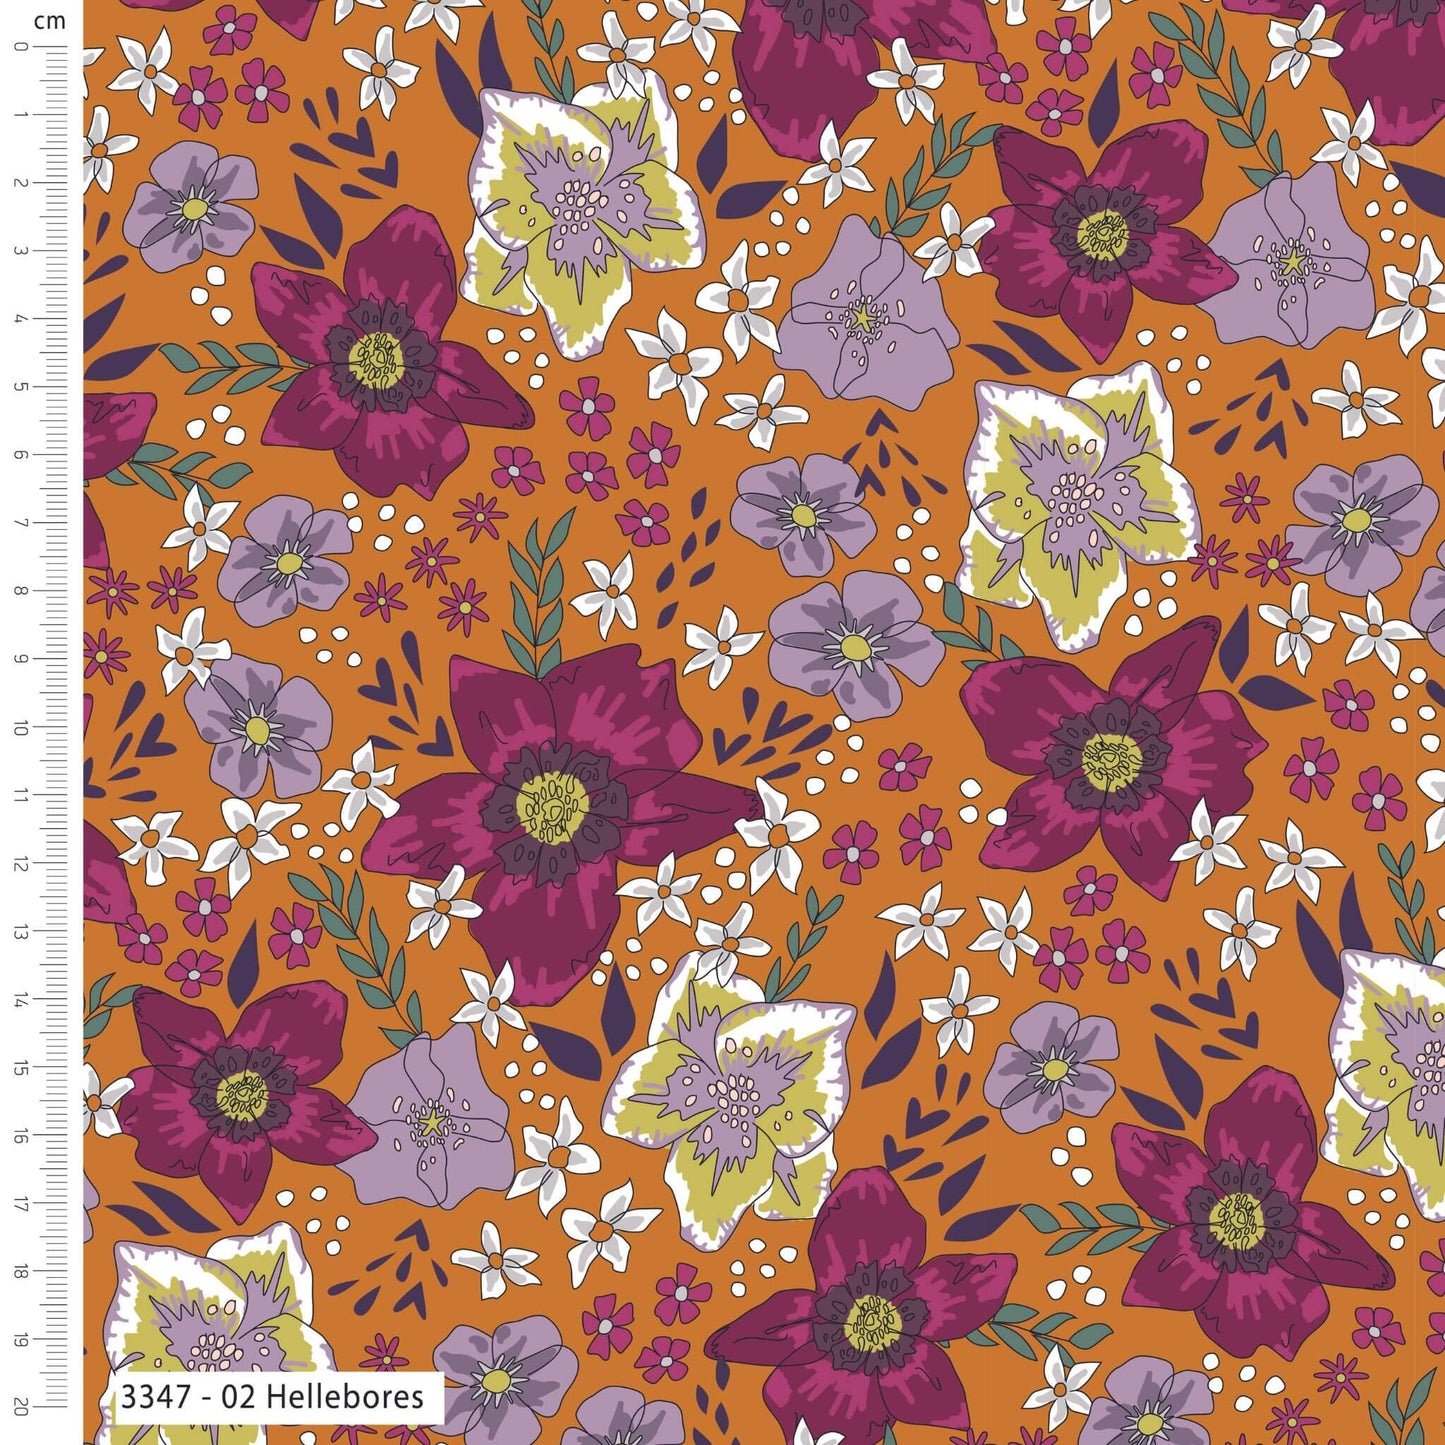 Hellebores - Midnight Meadows Fabric Range - The Crafty Lass